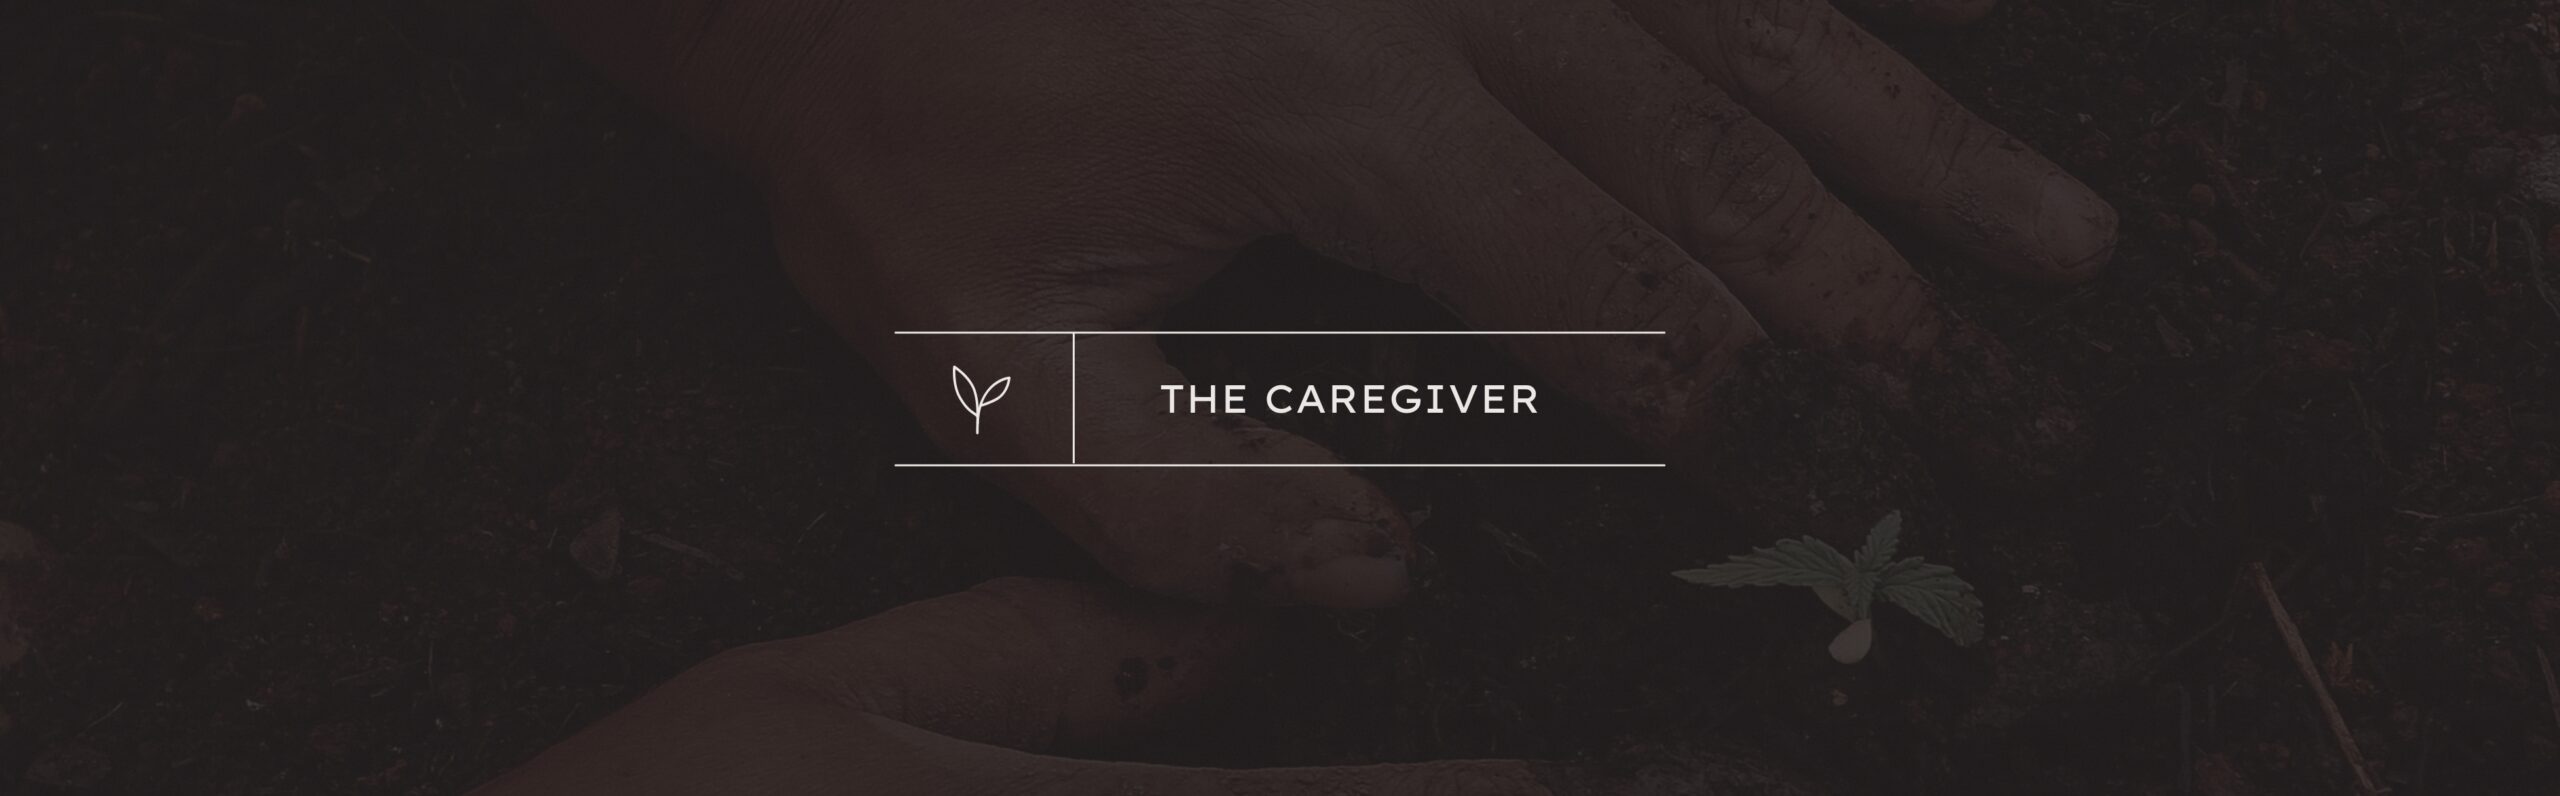 Brand Archetypes: The Caregiver 